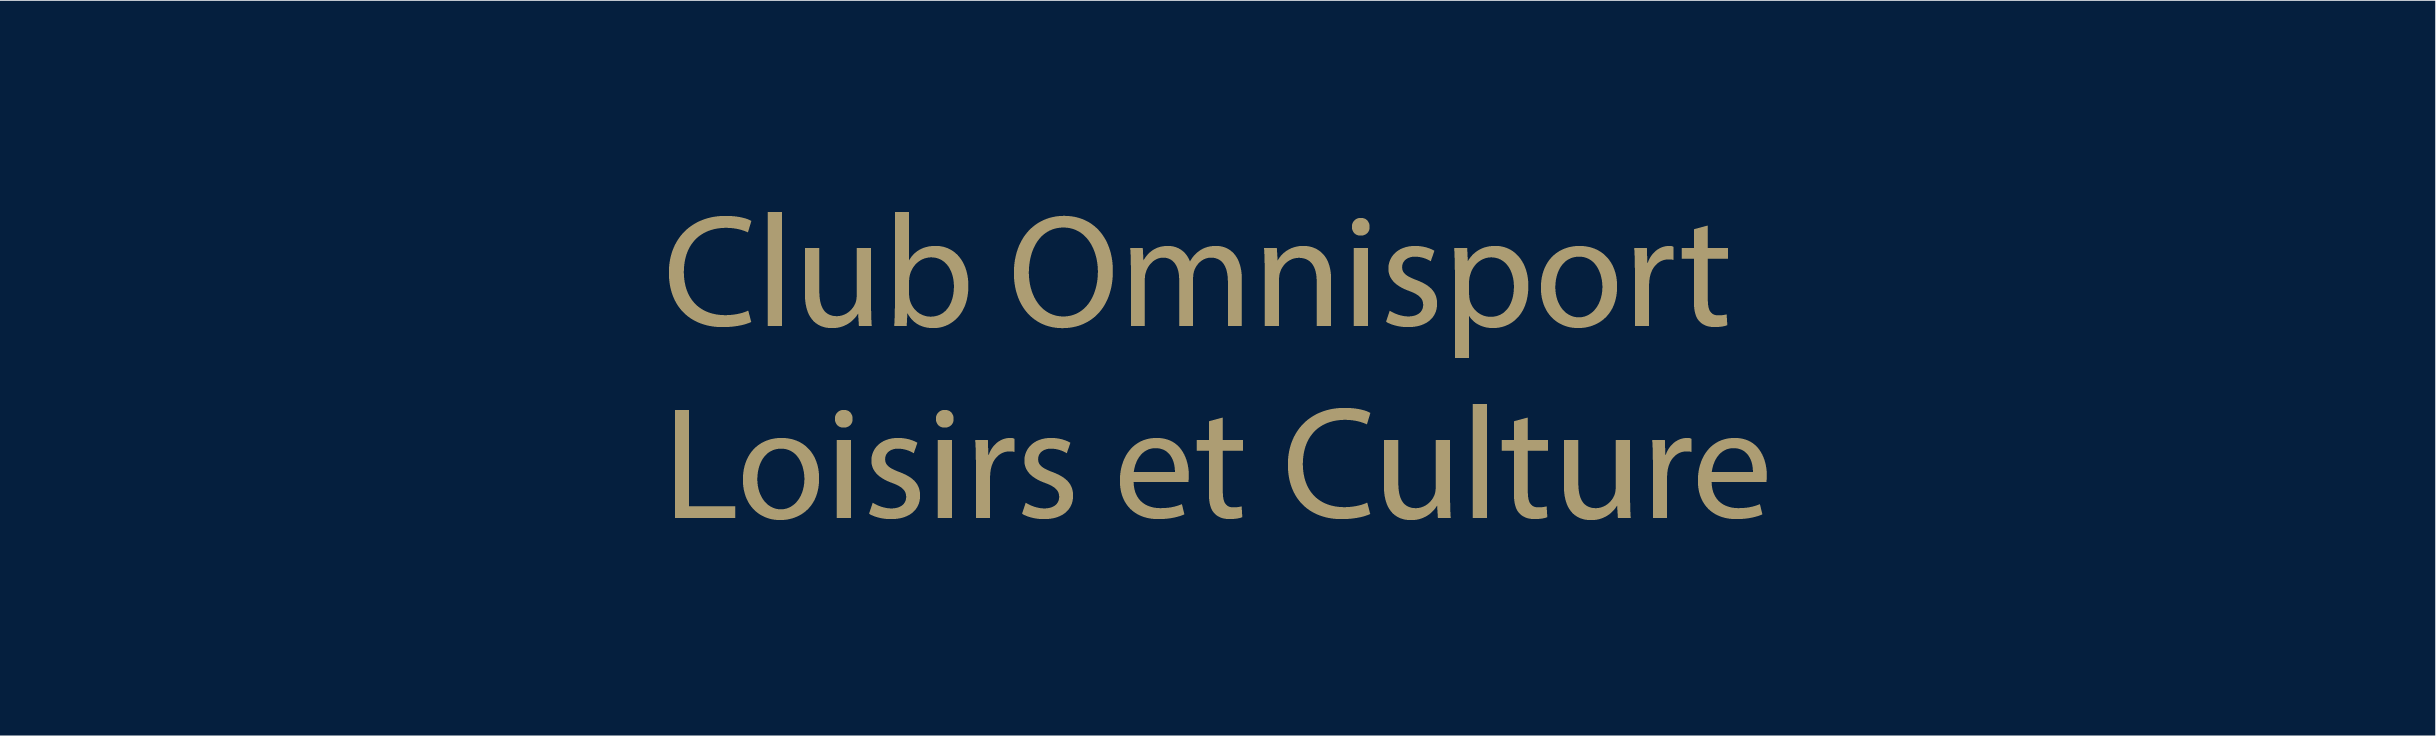 Club Omnisport Loisir et Culture 